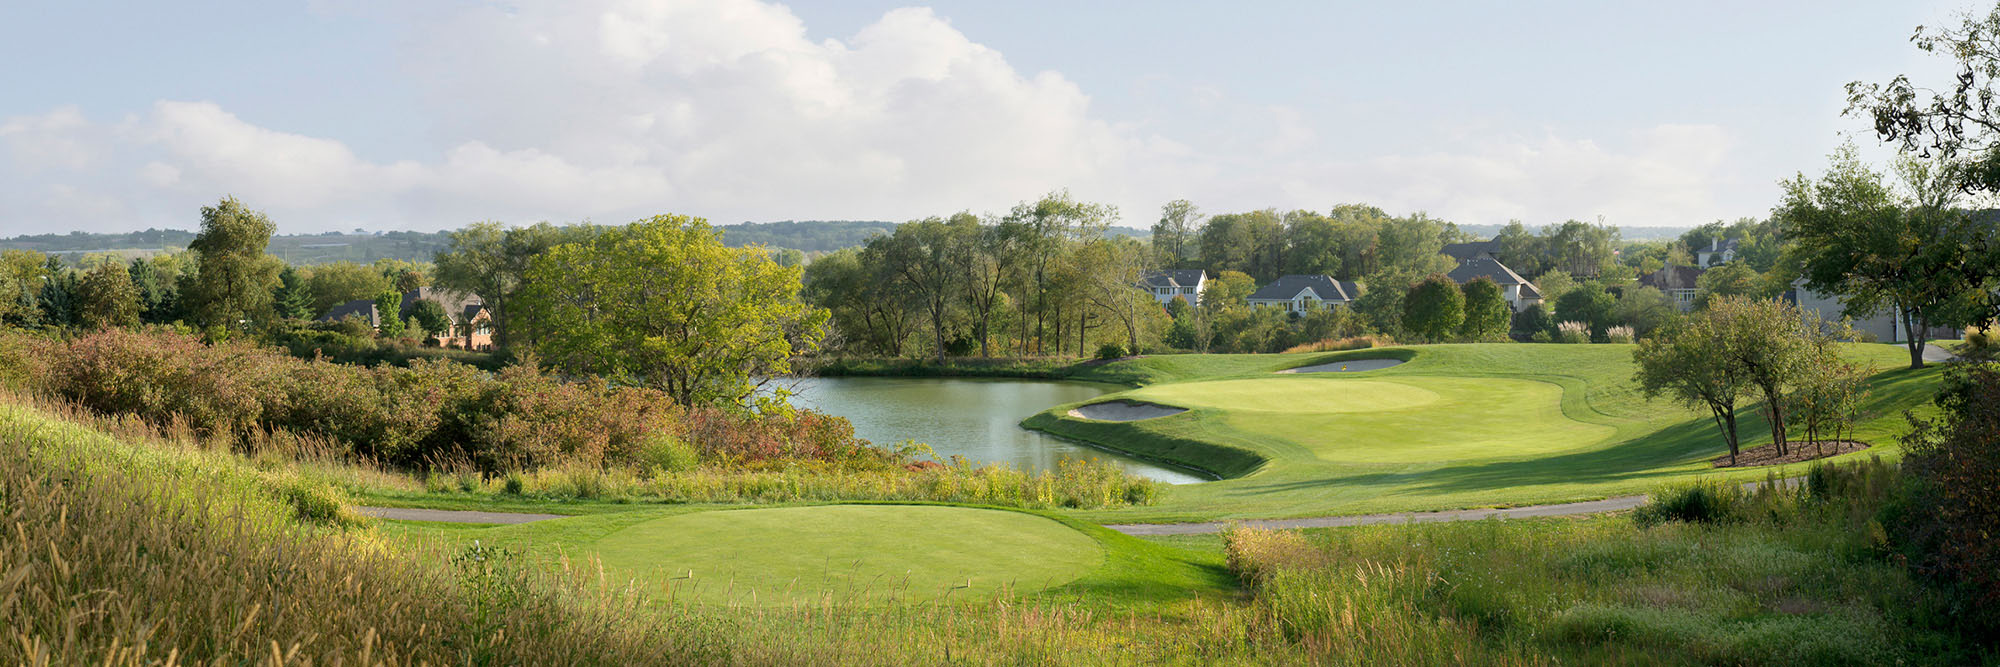 Golf Course Image - Glen Oaks No. 2